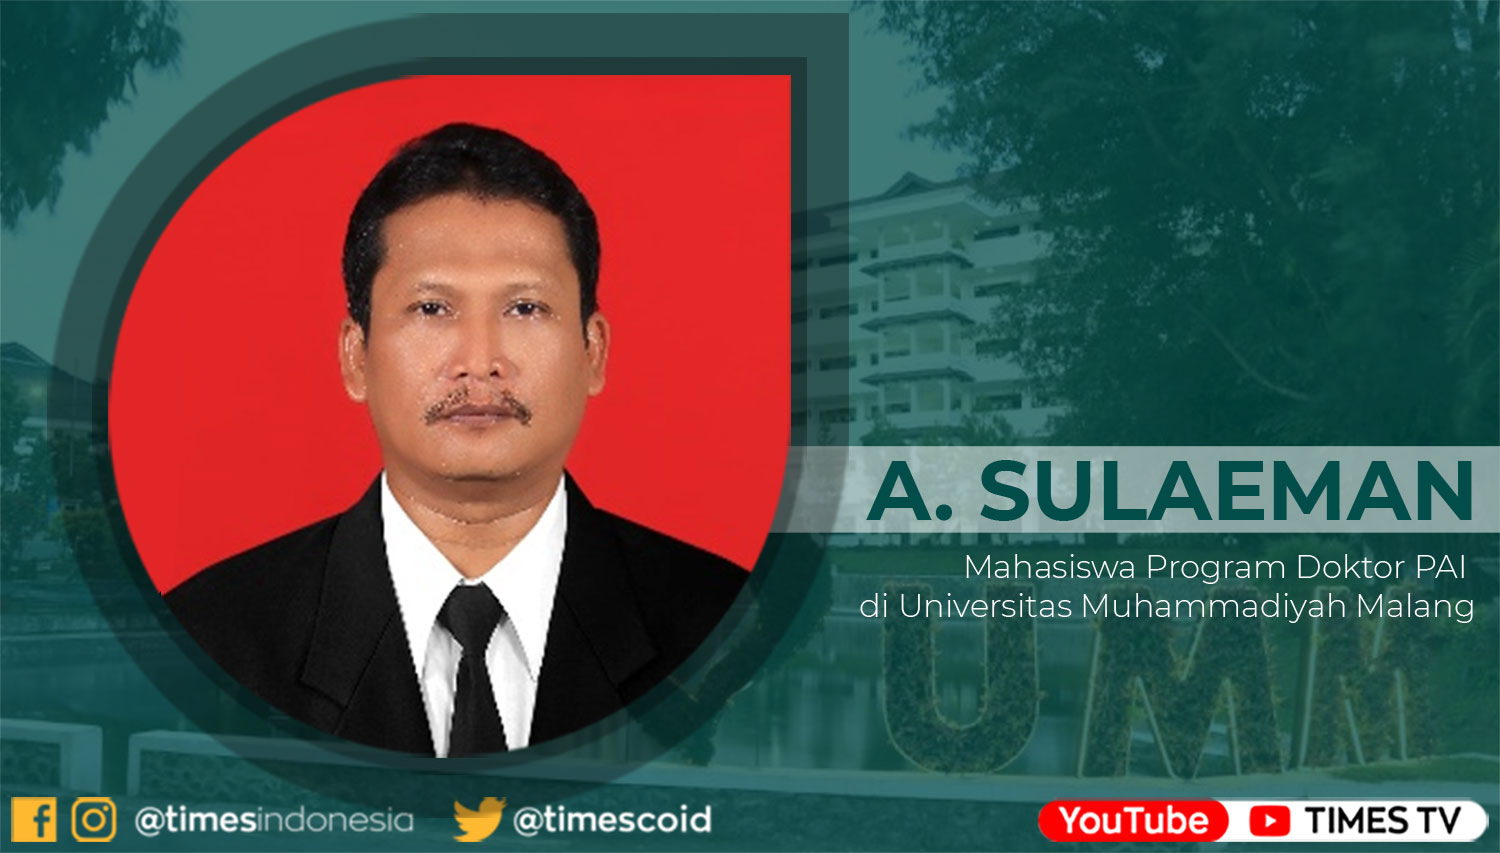 A. Sulaeman, Mahasiswa Program Doktor Pendidikan Agama Islam di Universitas Muhammadiyah Malang.